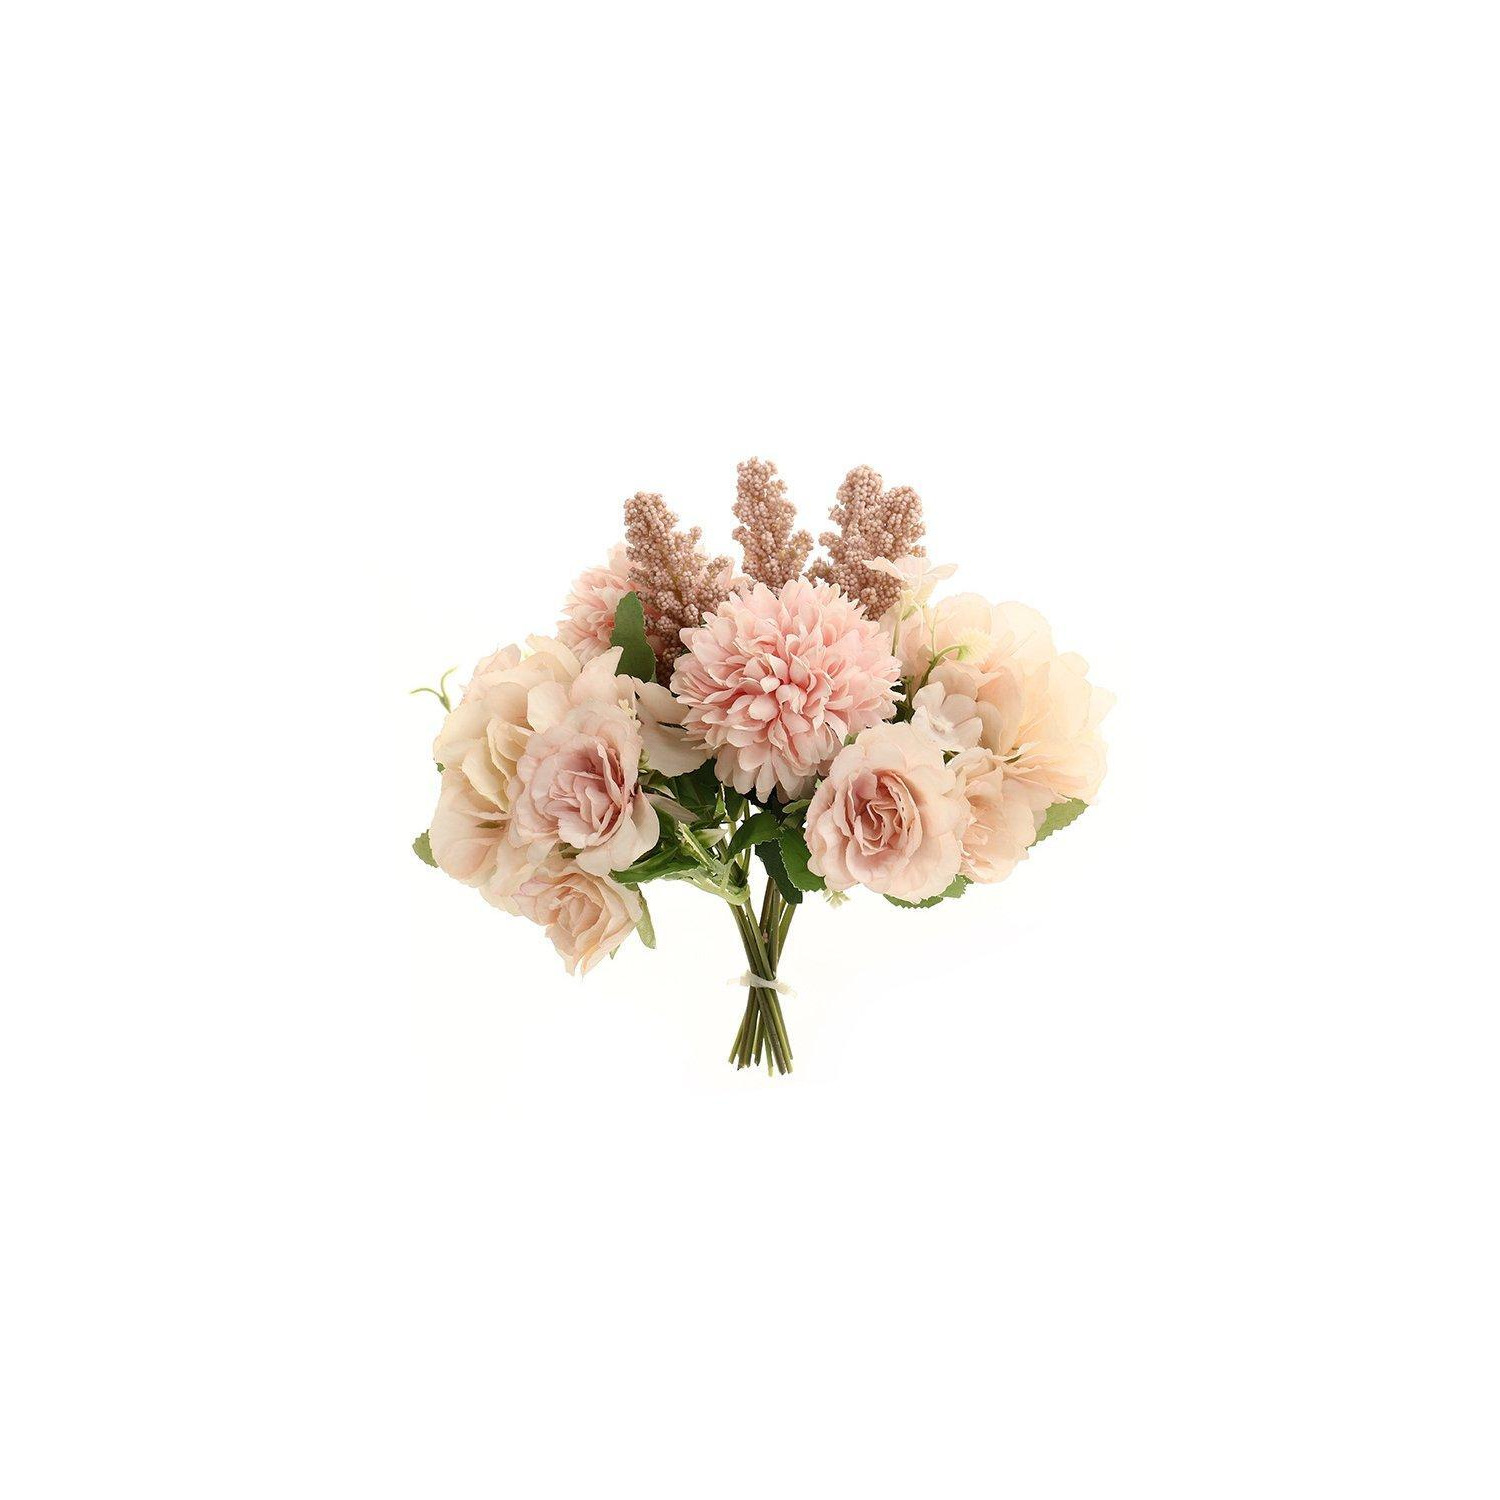 Romantic Artificial Bouquet for Home Wedding Decoration - image 1